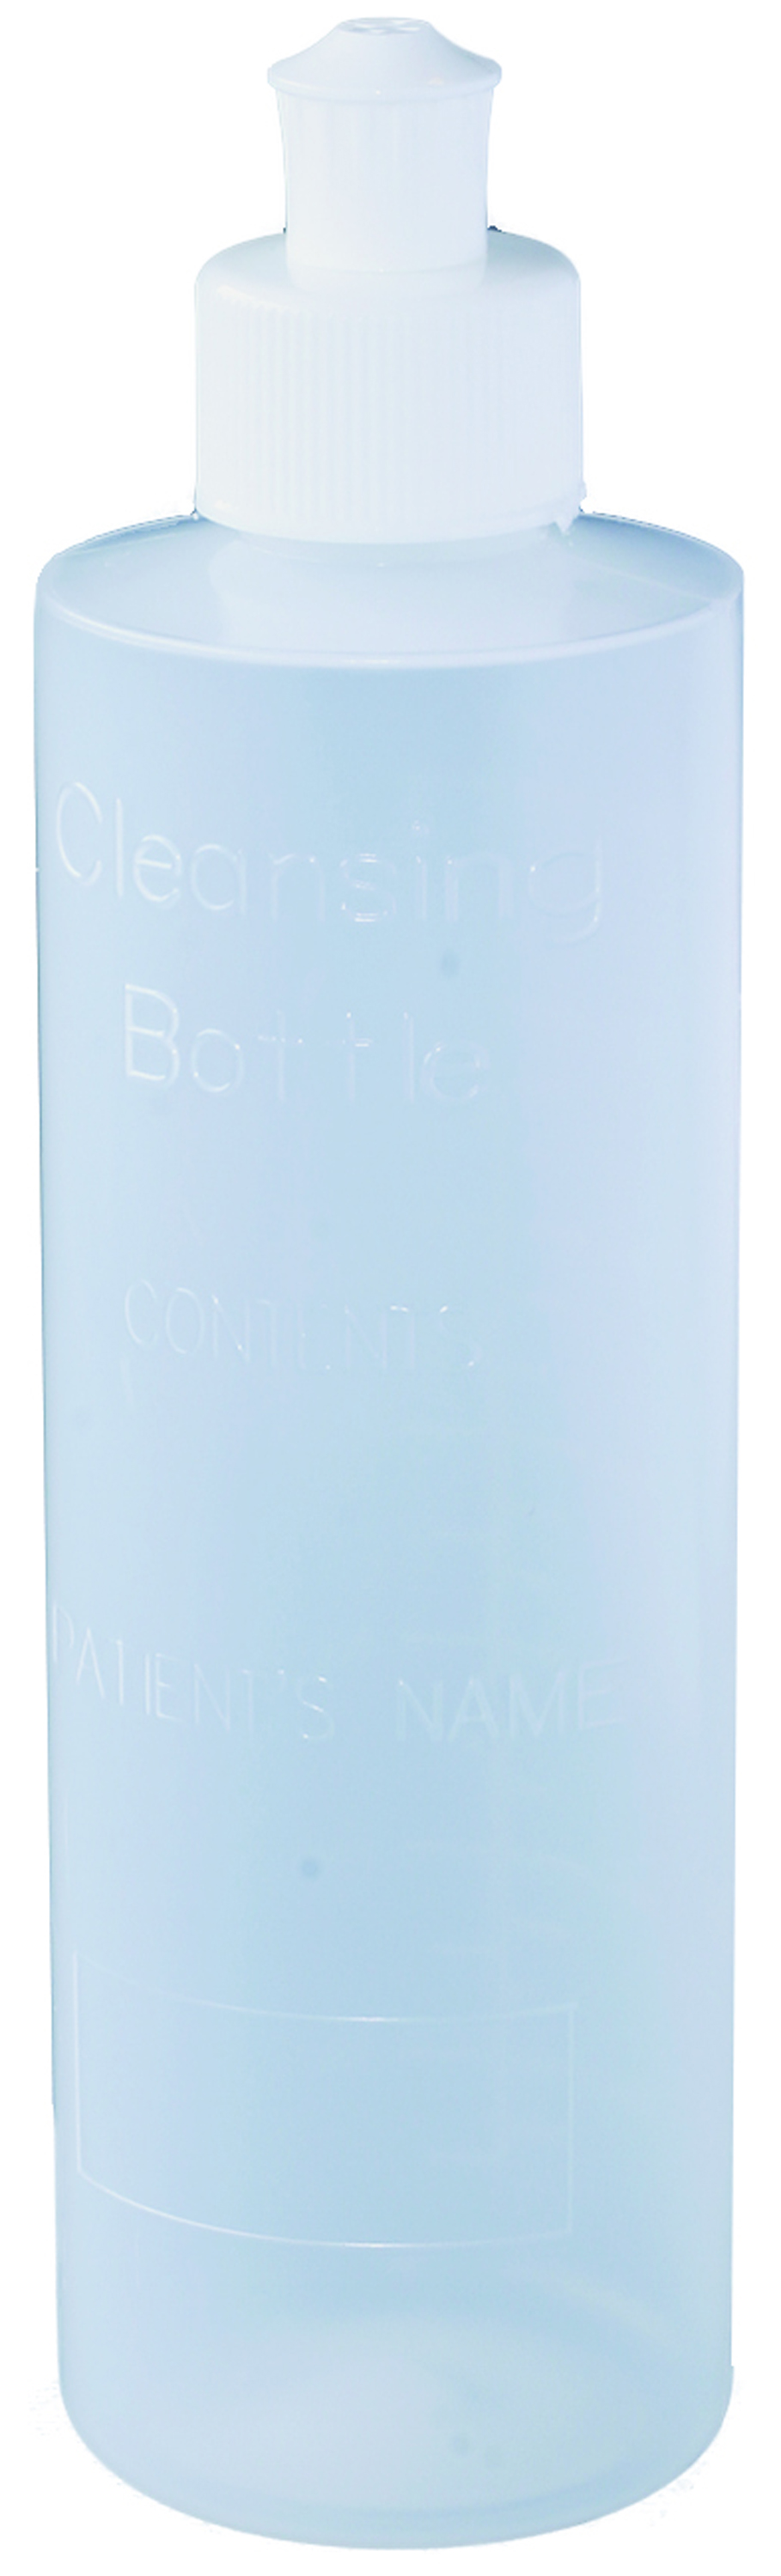 8 oz. Peri Bottles (Individually Polybagged)